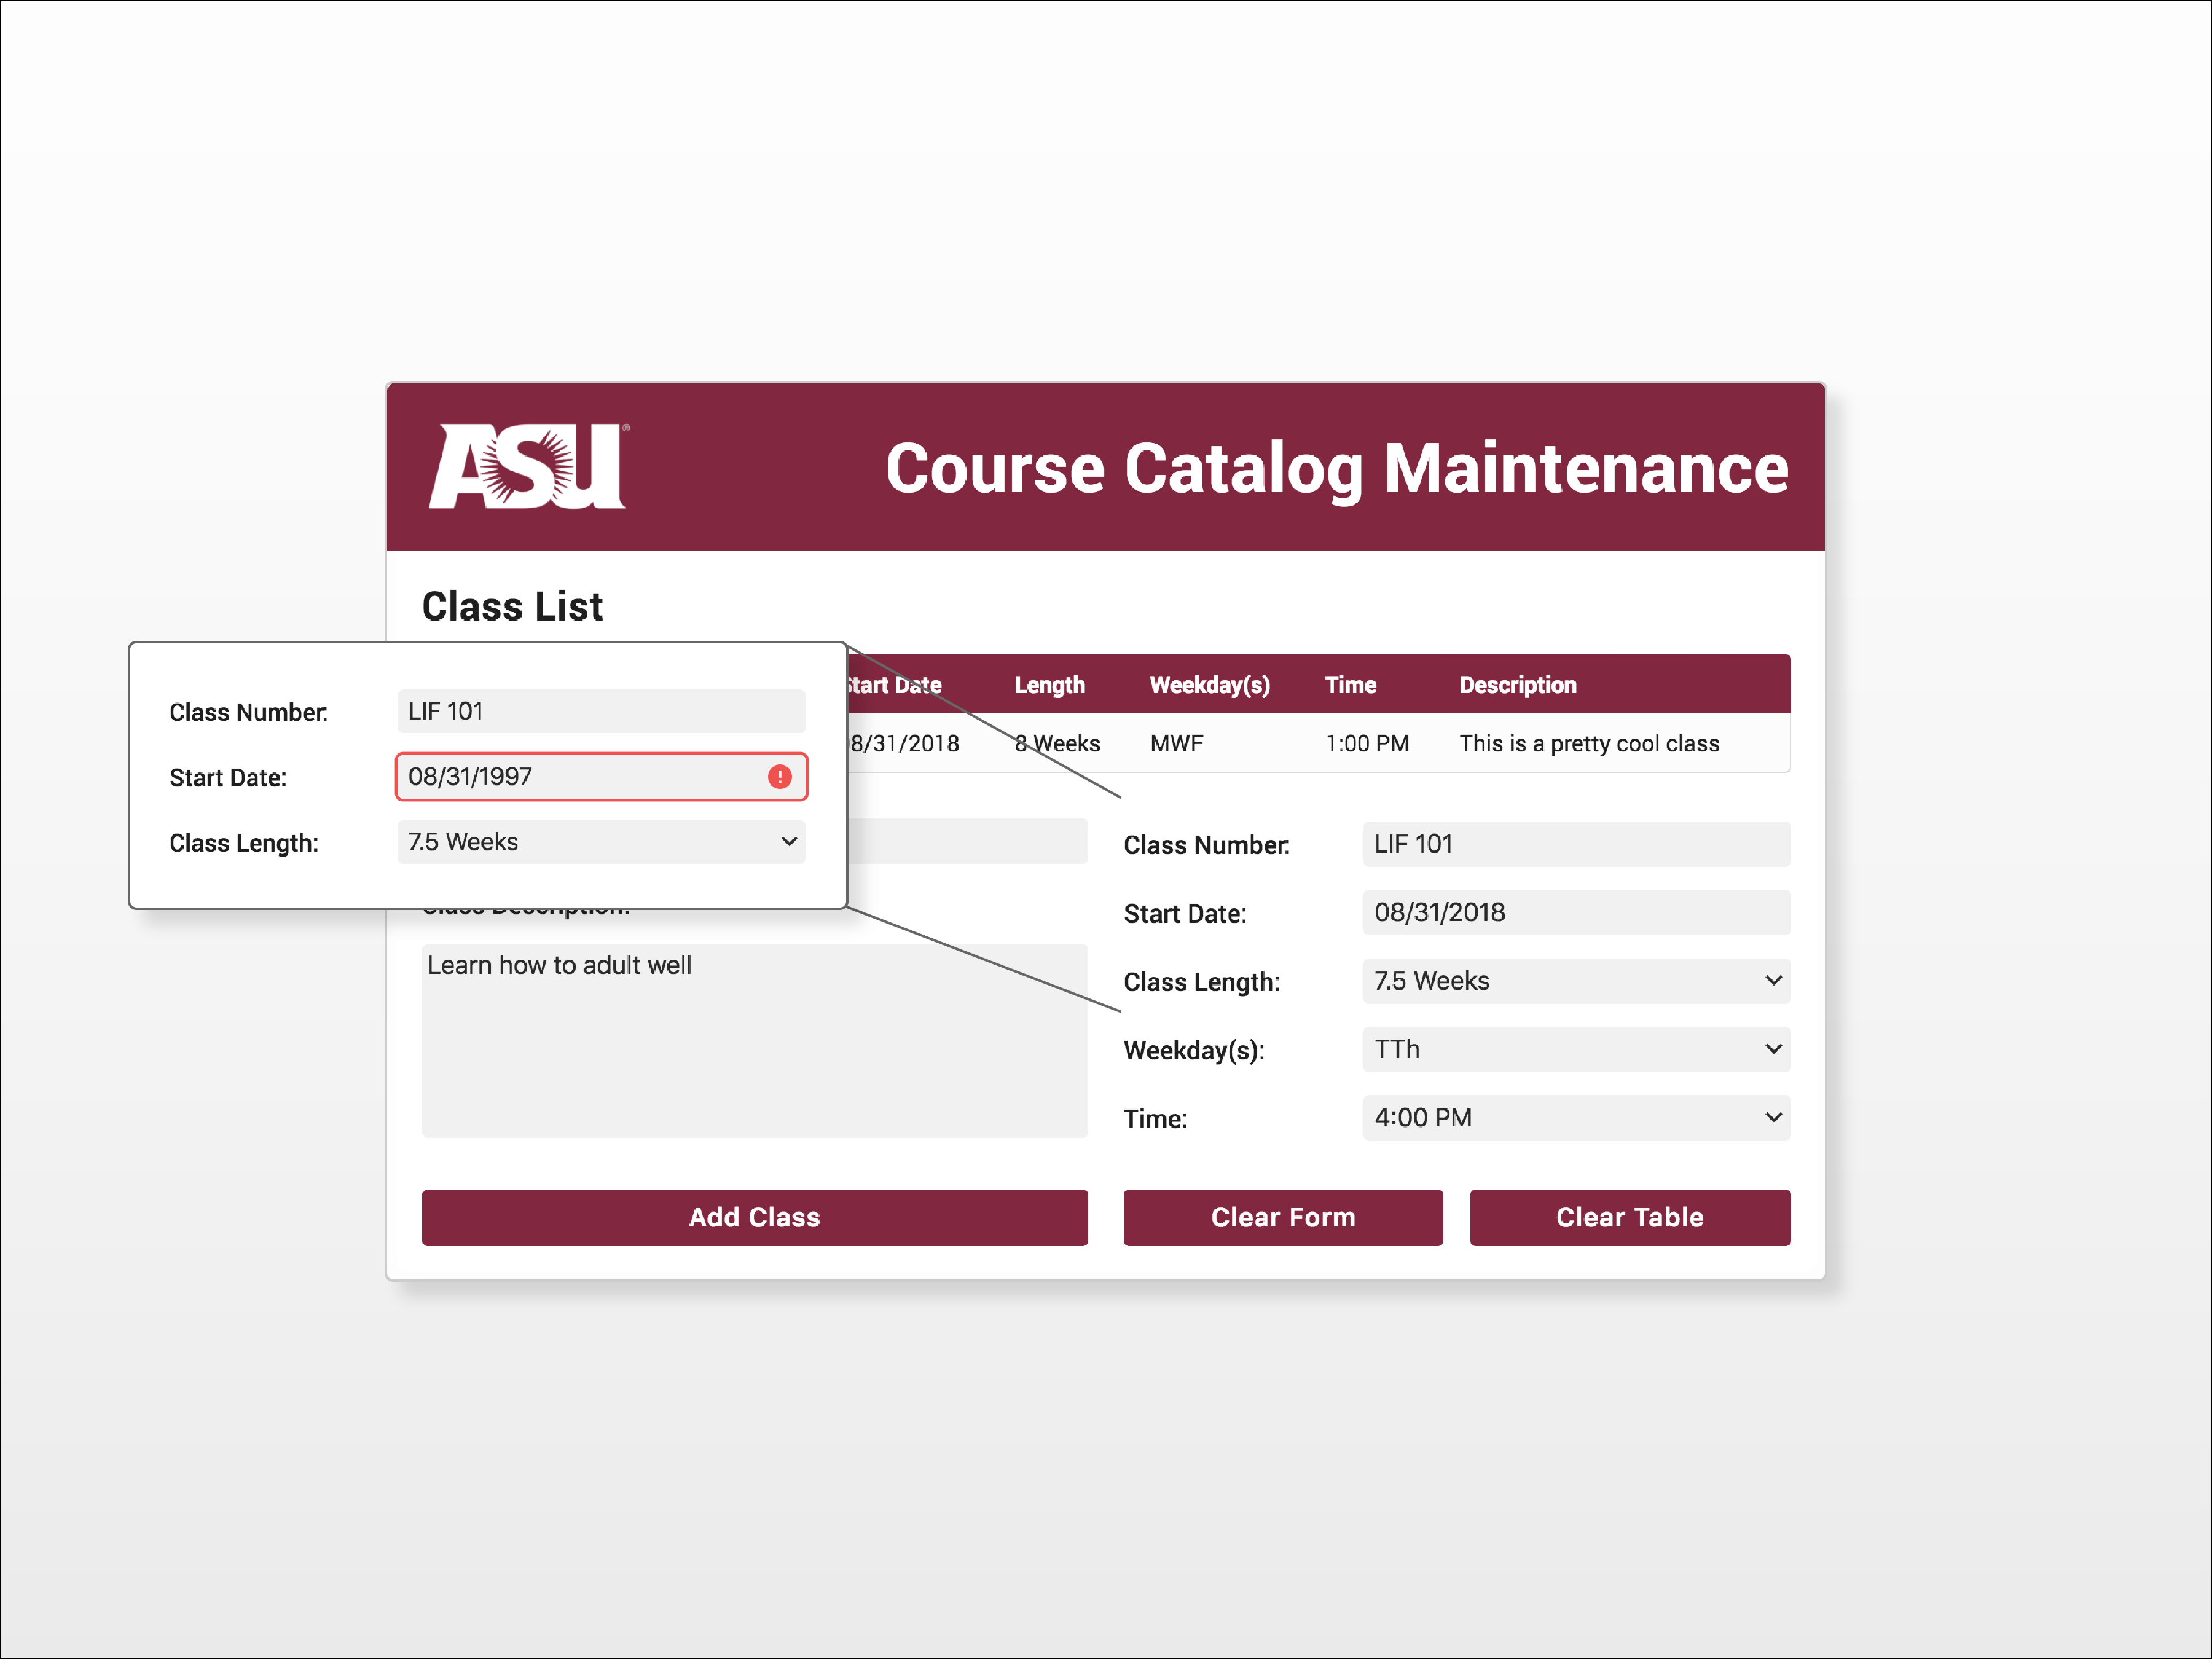 ASU Course Catalog Maintenance Web App